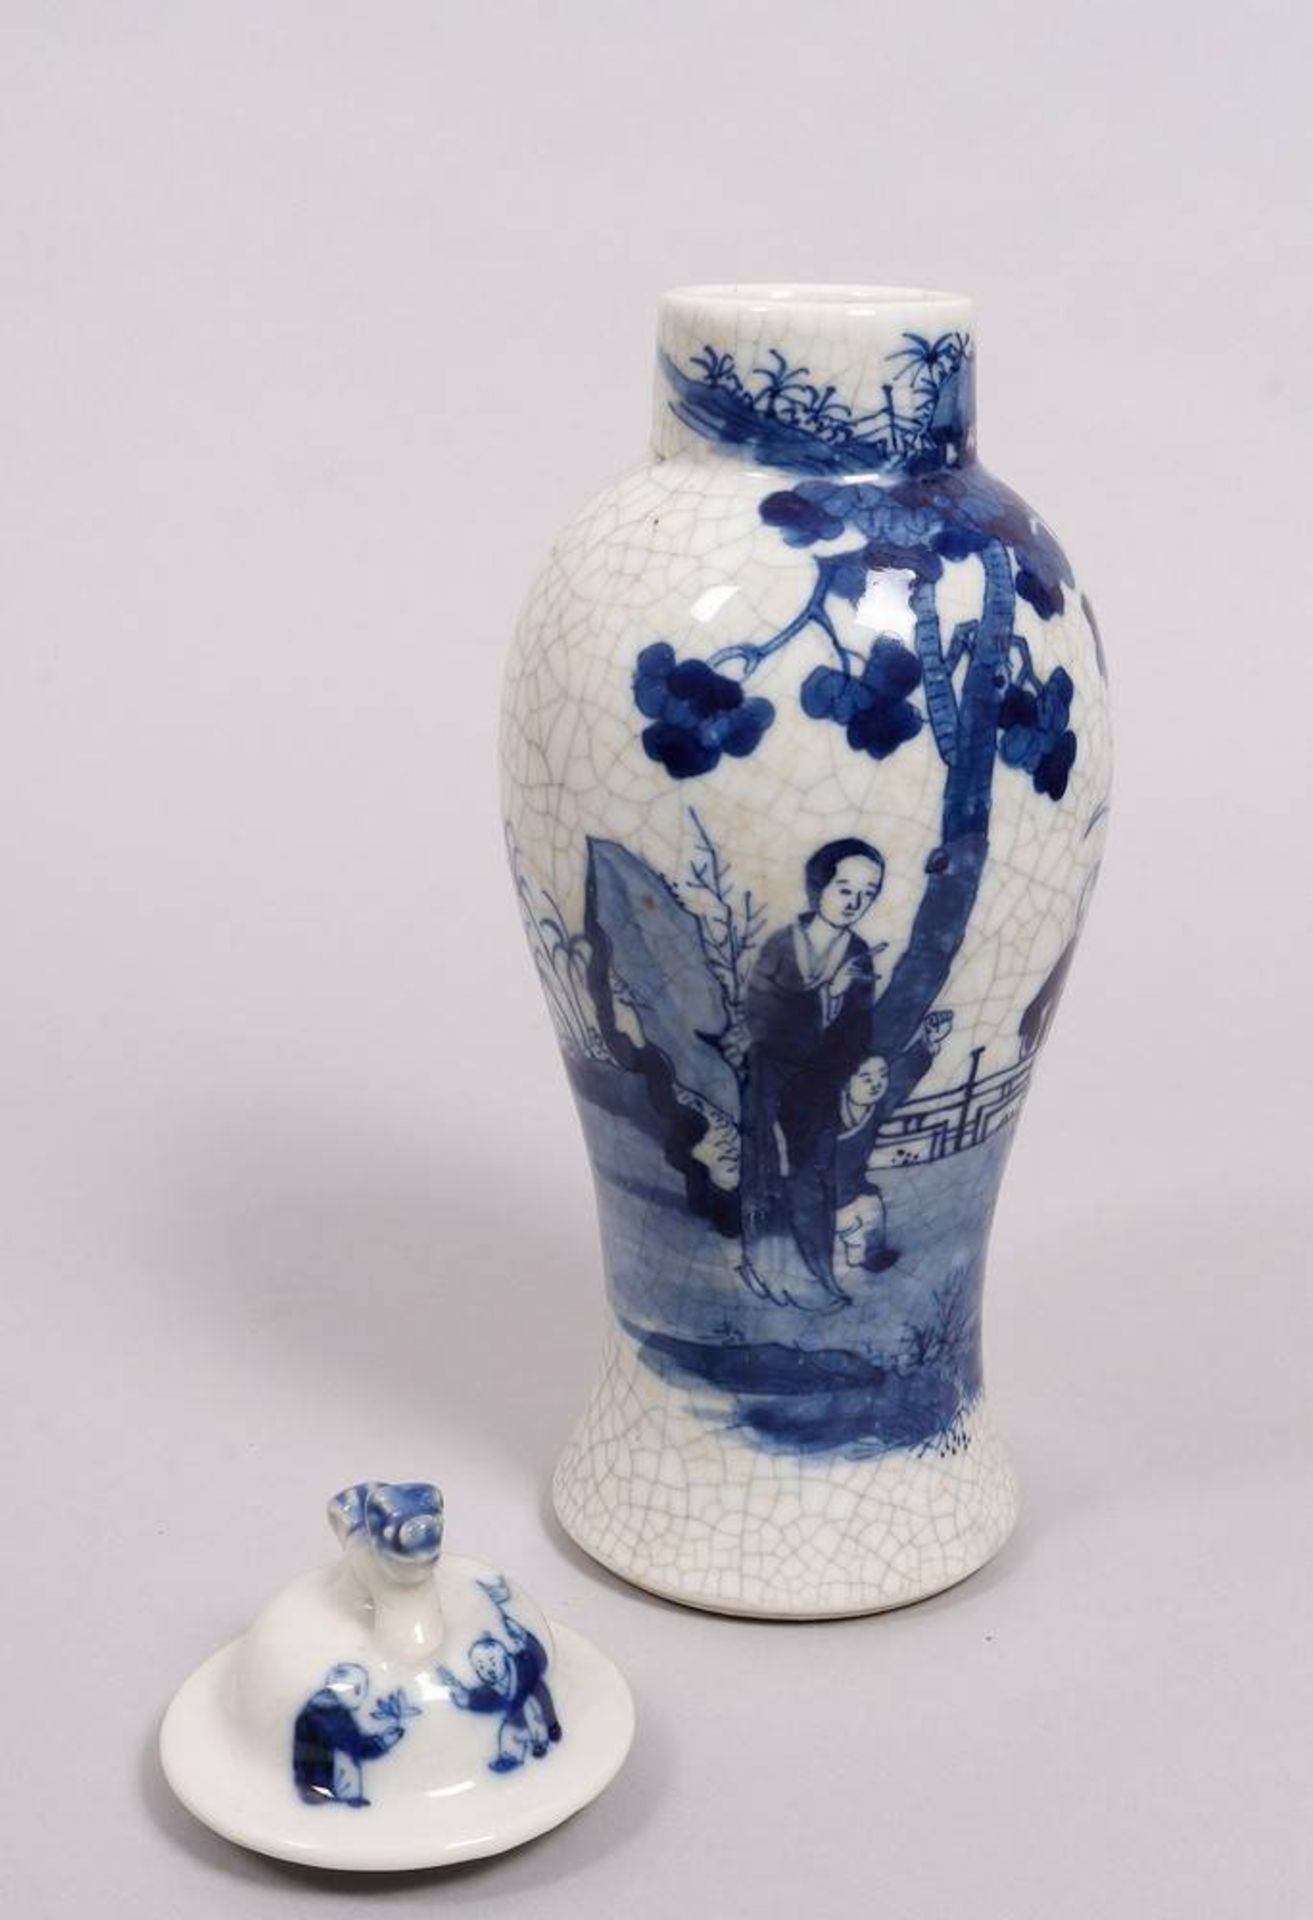 Lidded vase, China, probably Republic period - Image 2 of 5